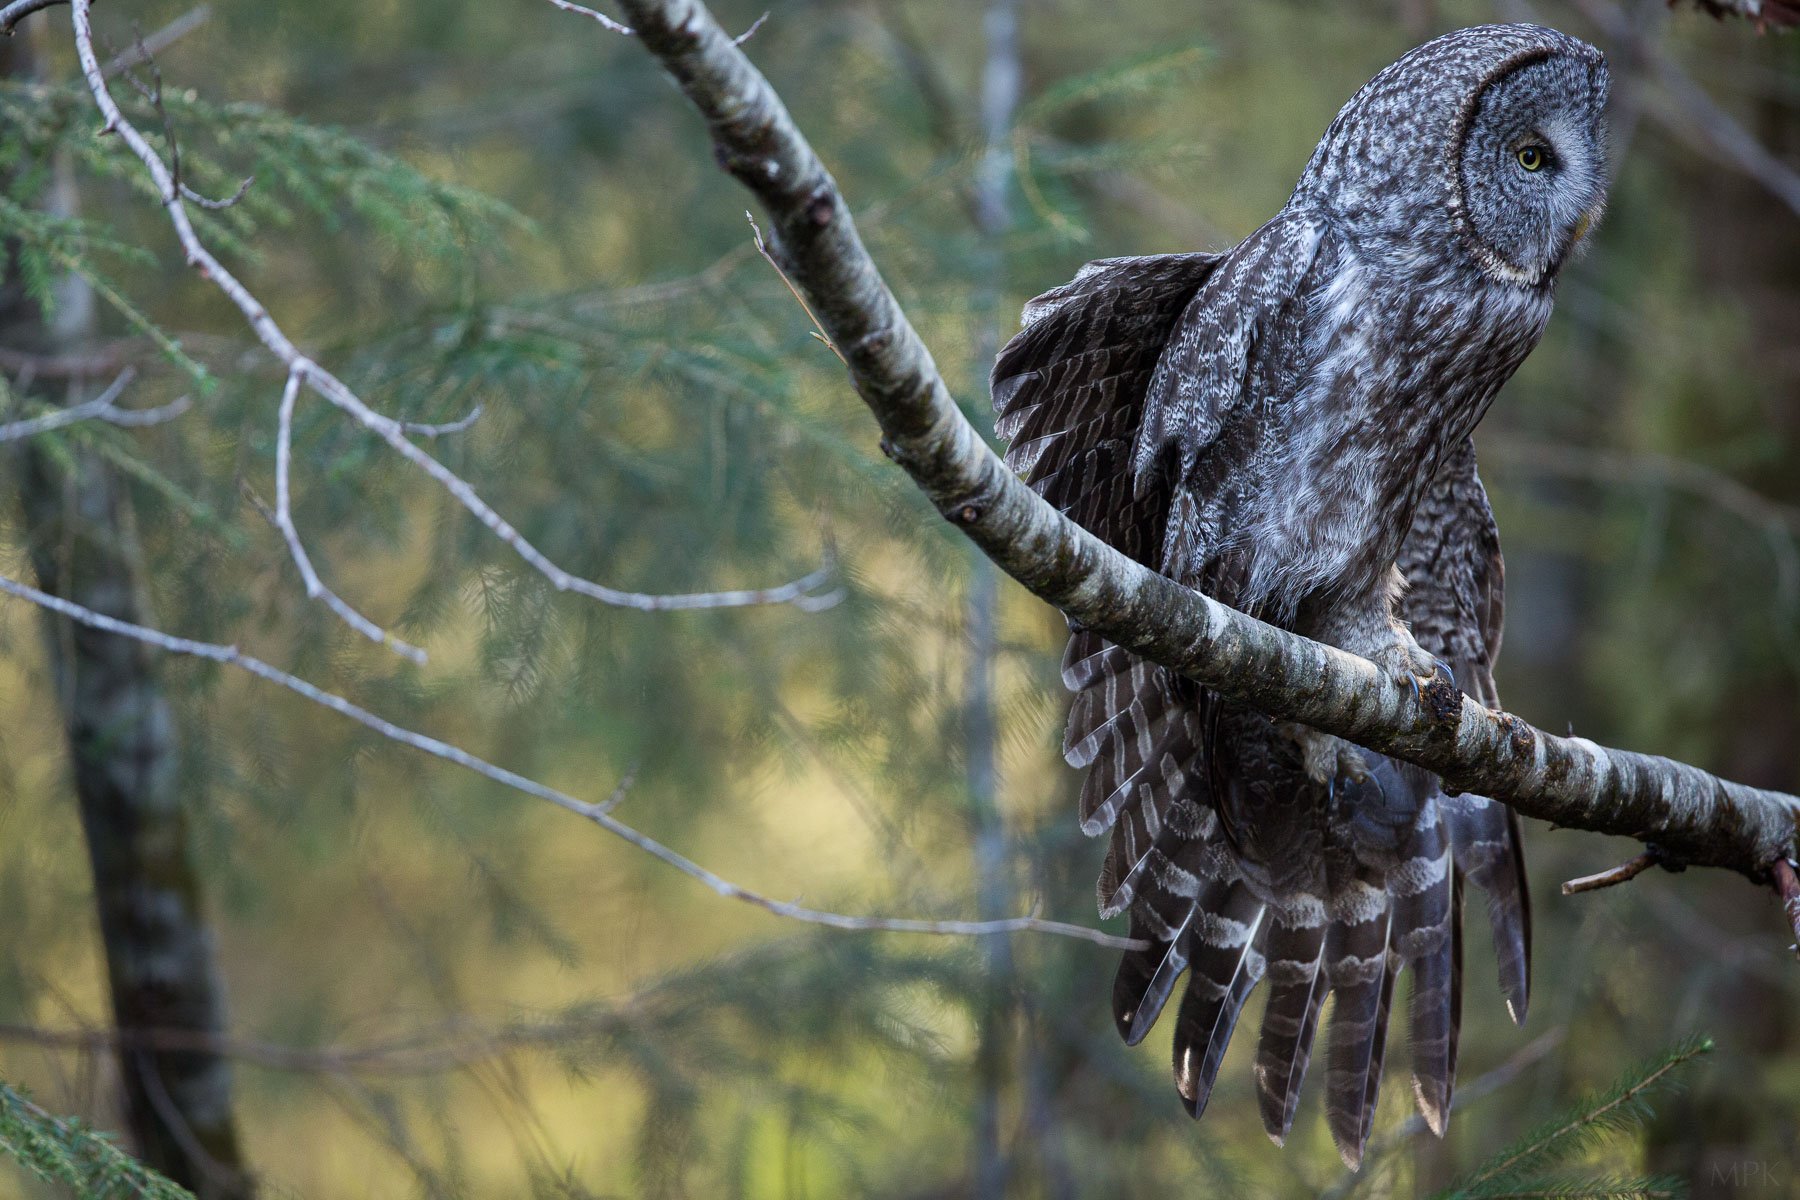 Great-Gray-Owl-Stretch-Wings-Preening-Feathers-Rest-Close-Matthew-Polvorosa-Kline.jpg